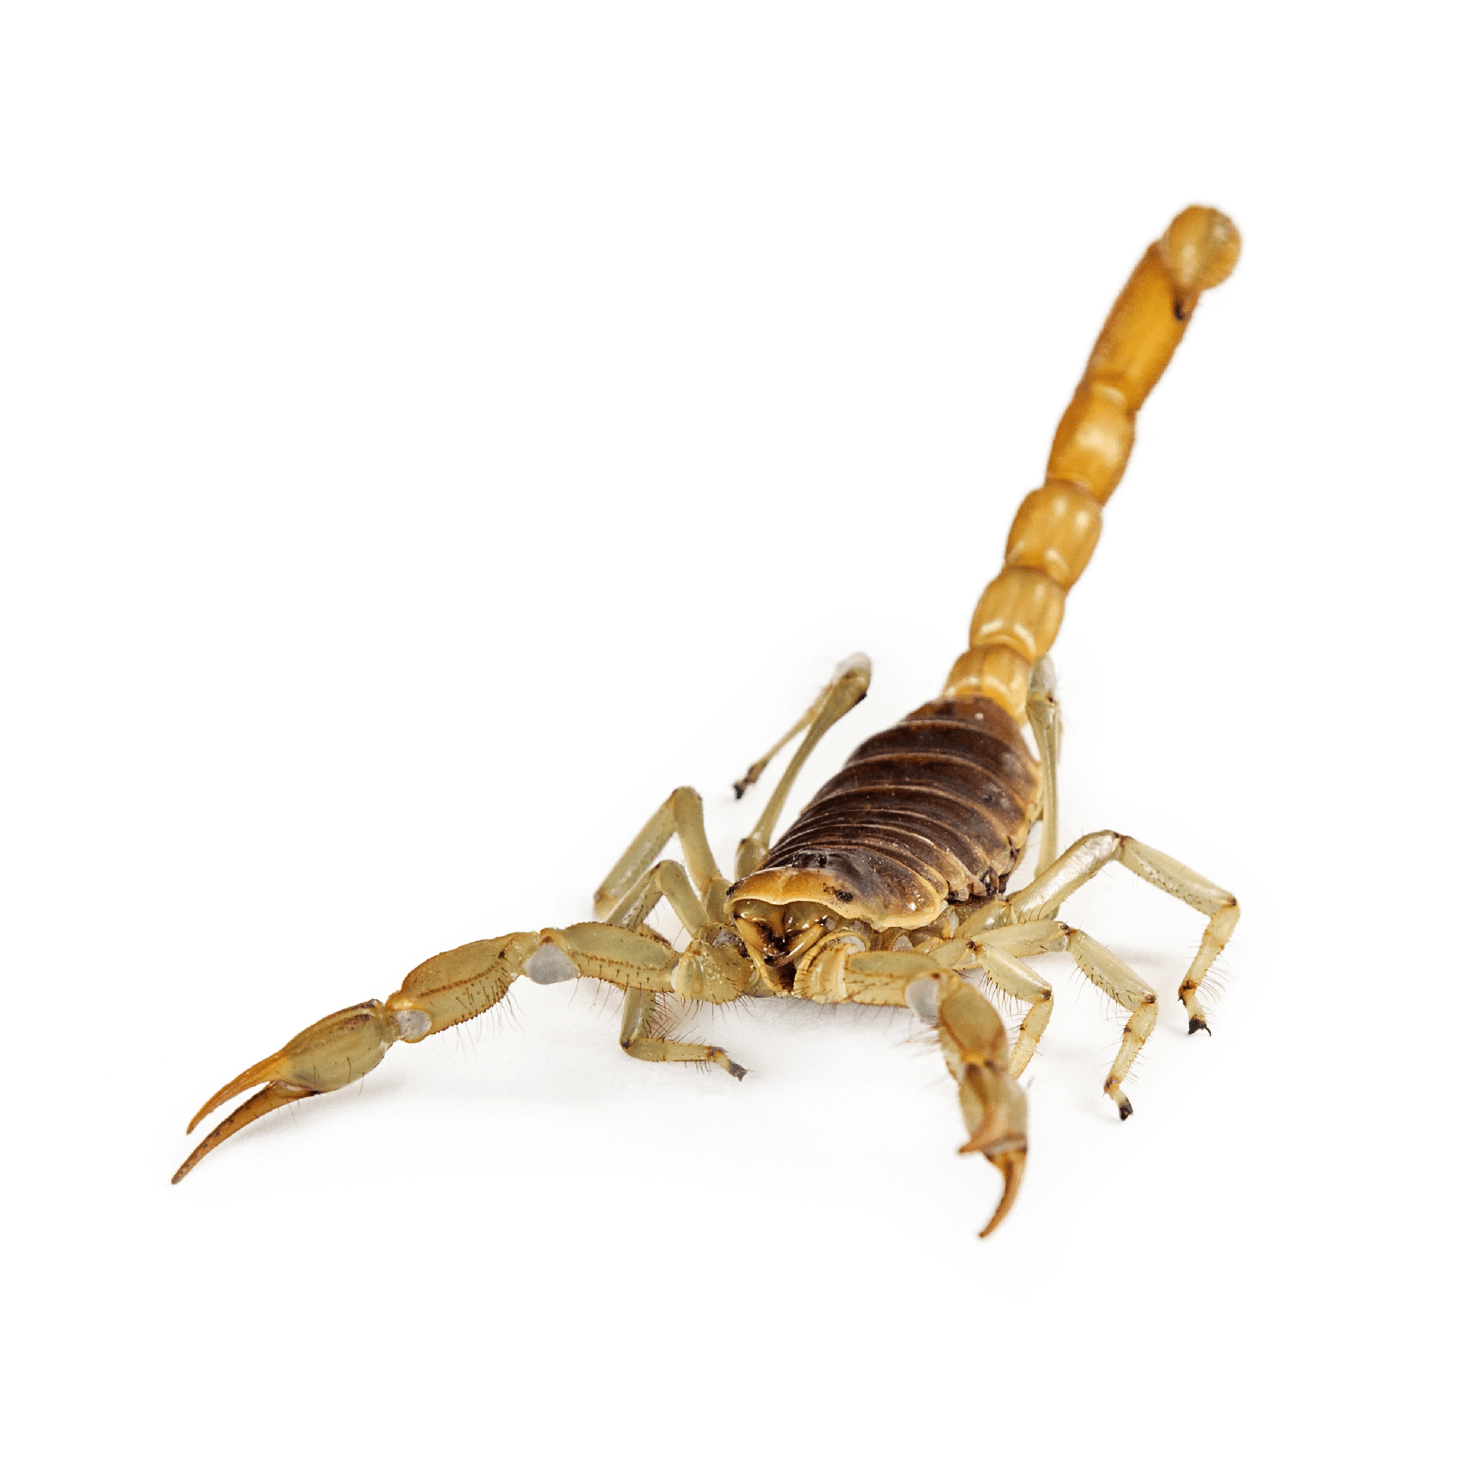 Desert Scorpion Isolatedon White